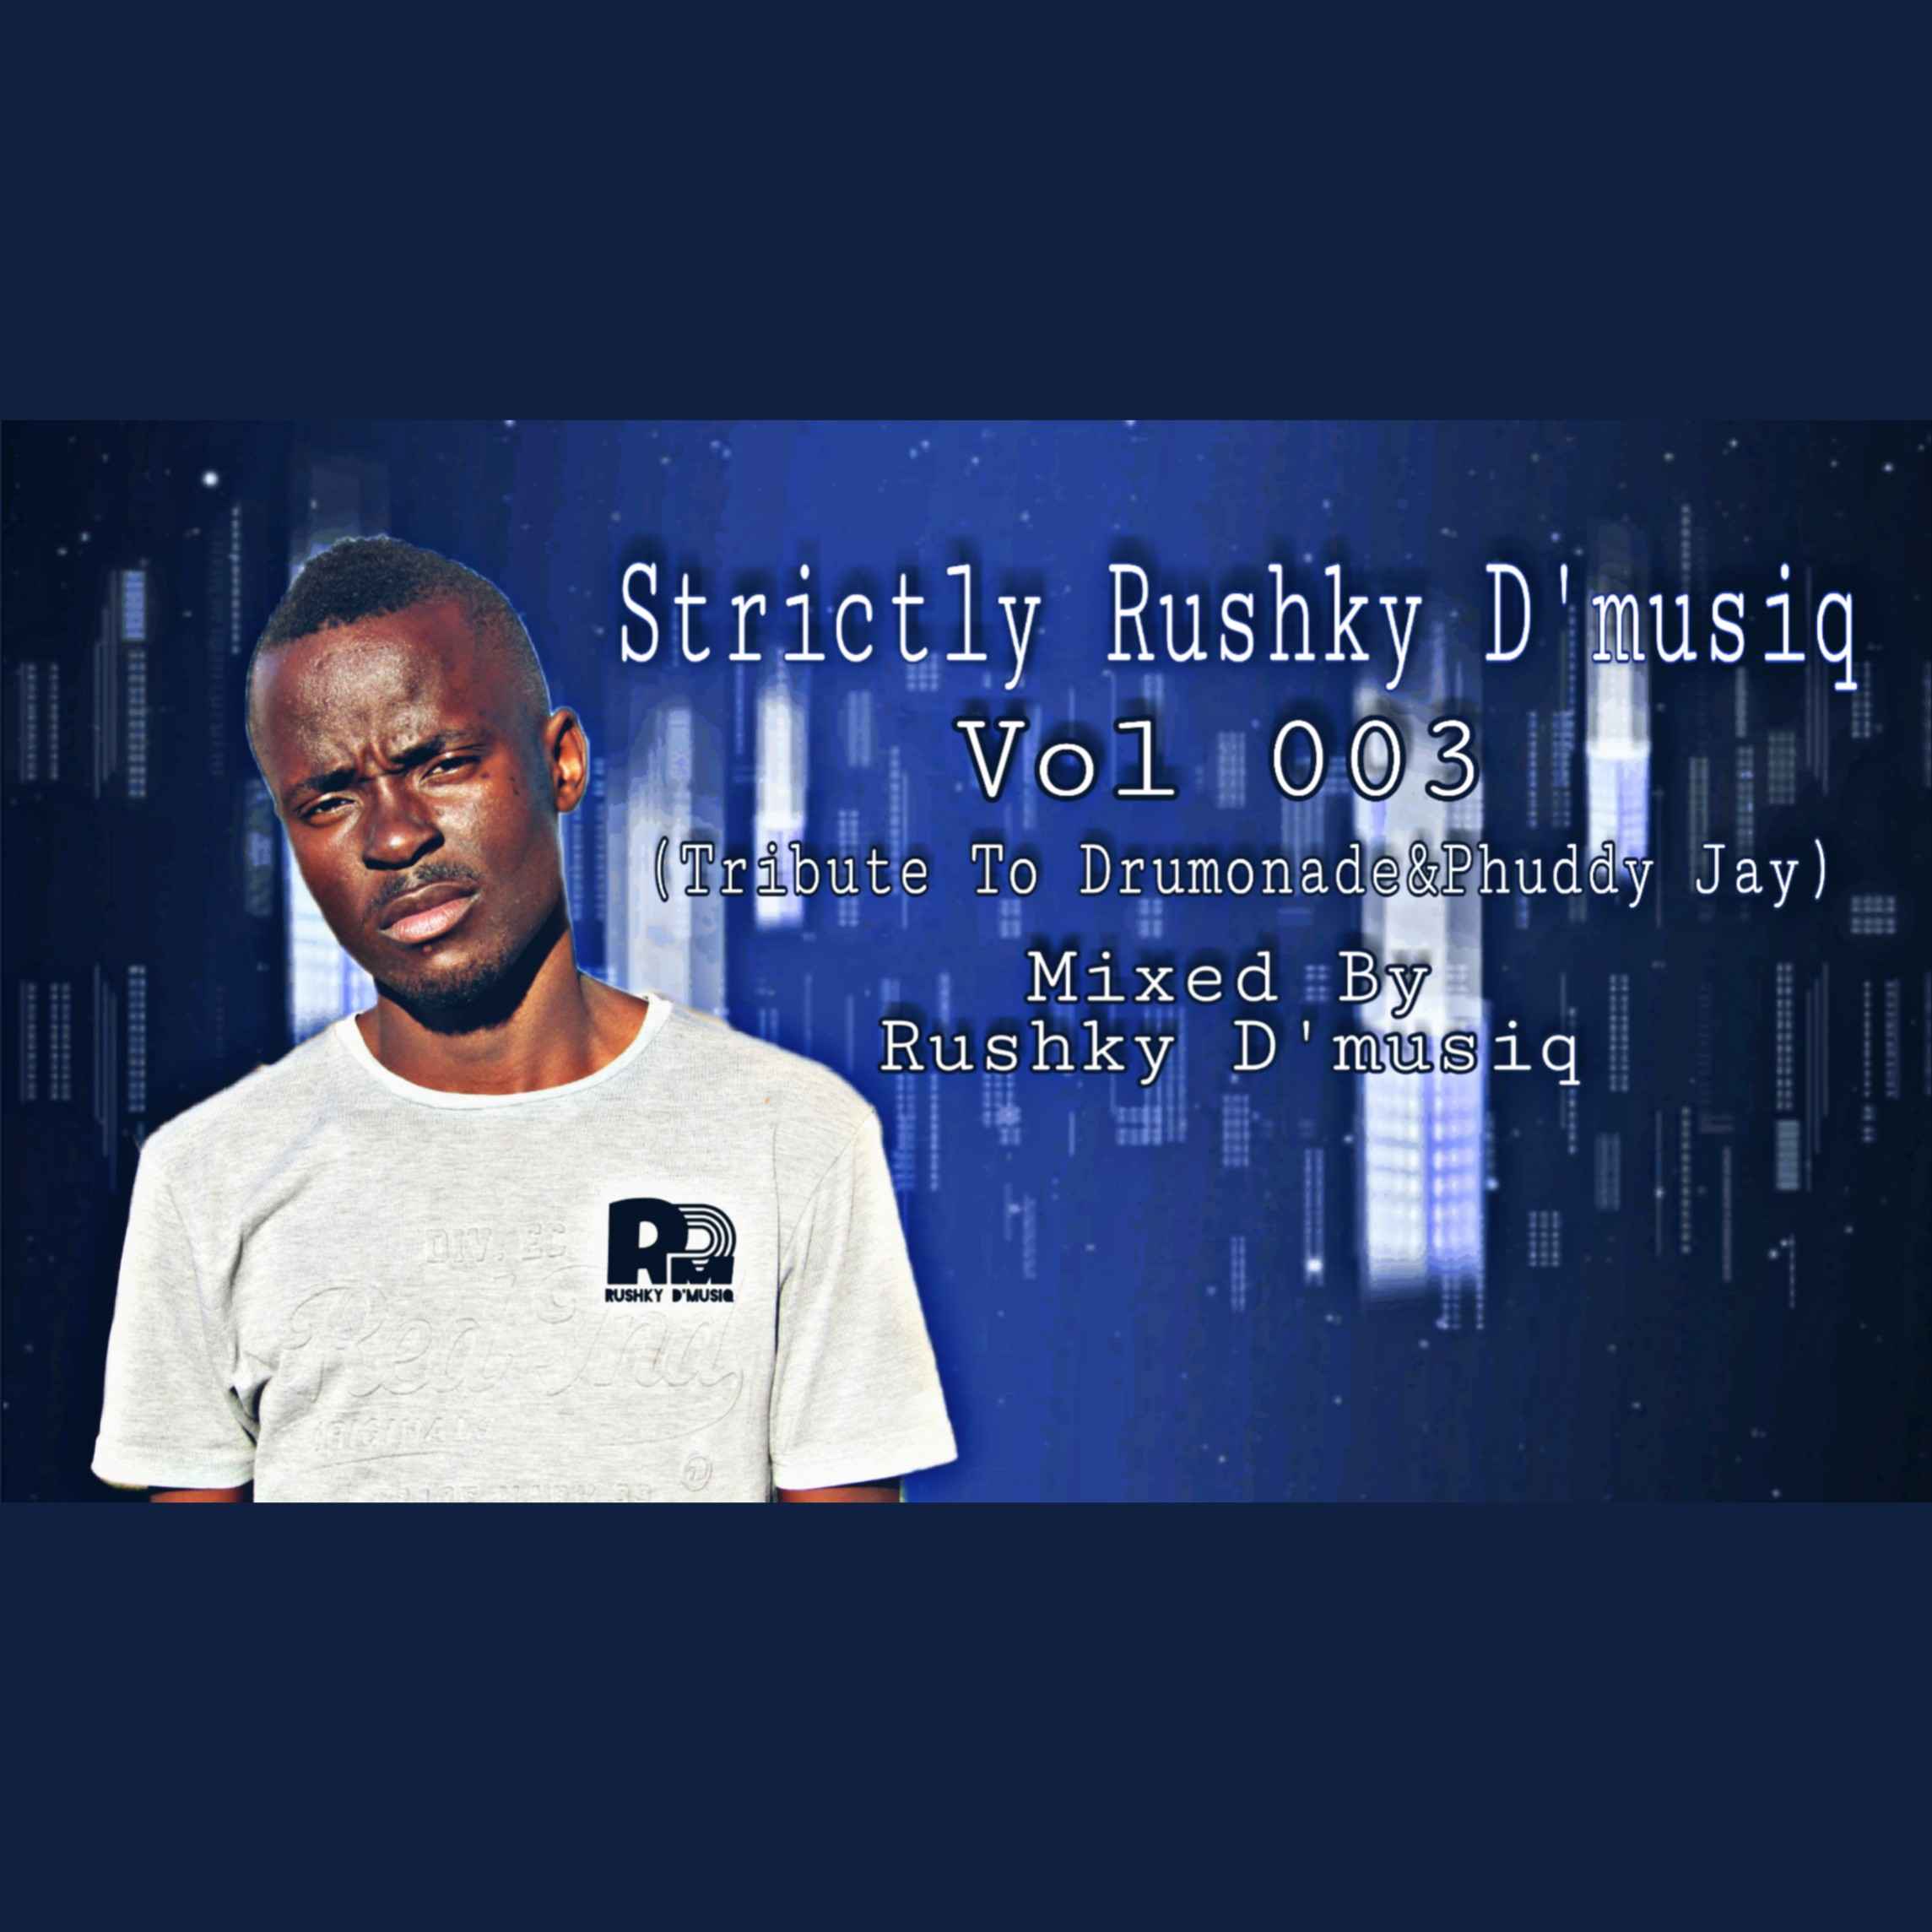 Rushky D’musiq – Strictly Rushky D’musiq VoL 003 (Tribute To Drumonade & Phuddy) mp3 download